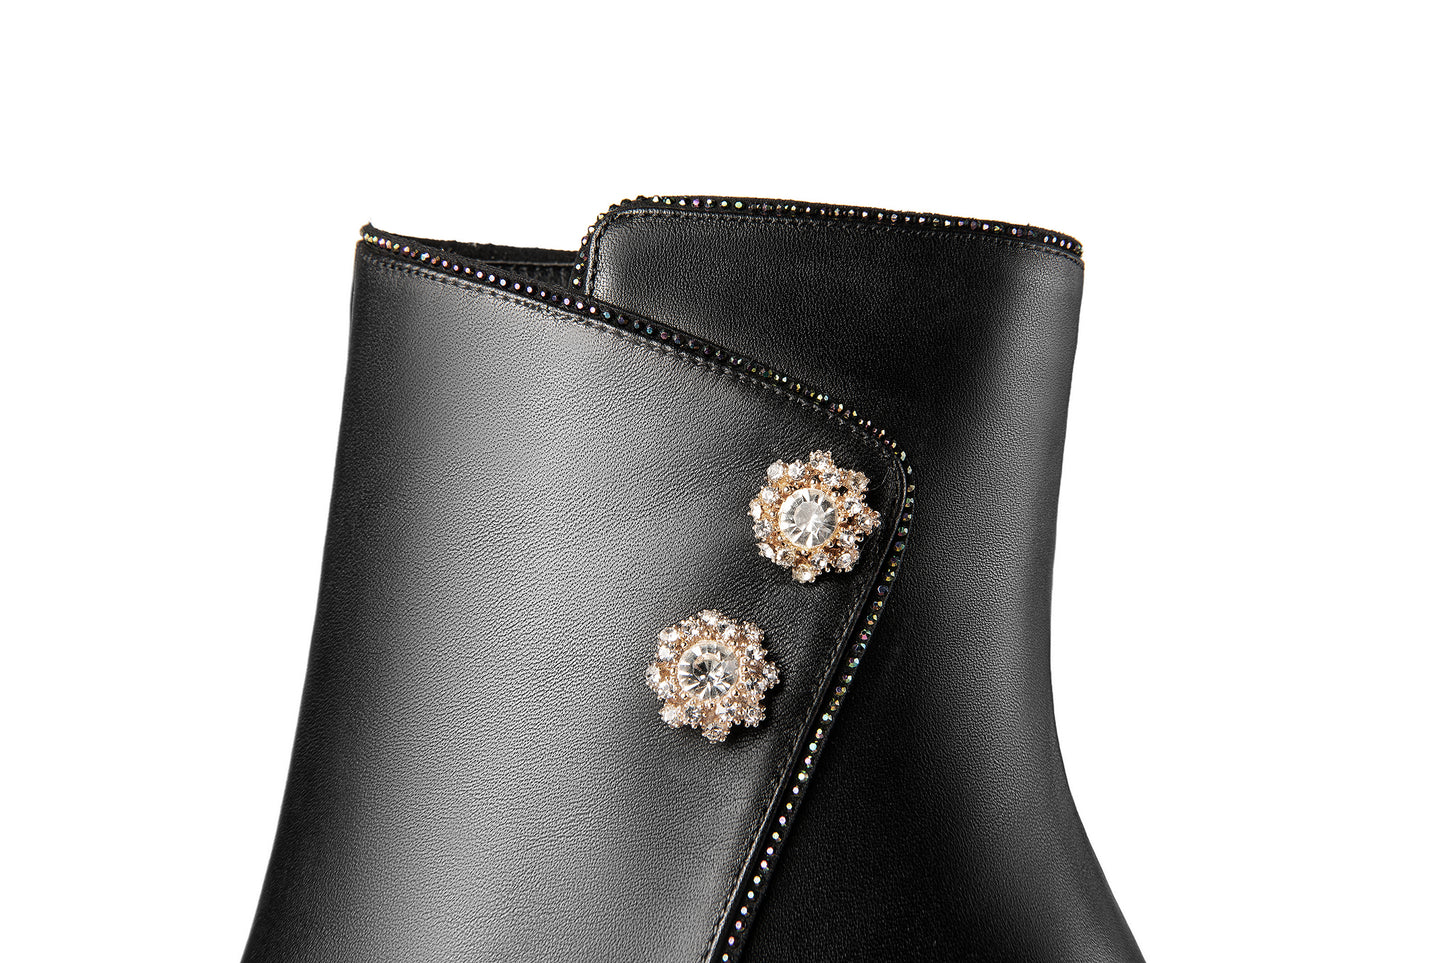 TinaCus Women's Handmade Genuine Leather Side Zip Up High Heel Pointed Toe Ankle Dressy Booties